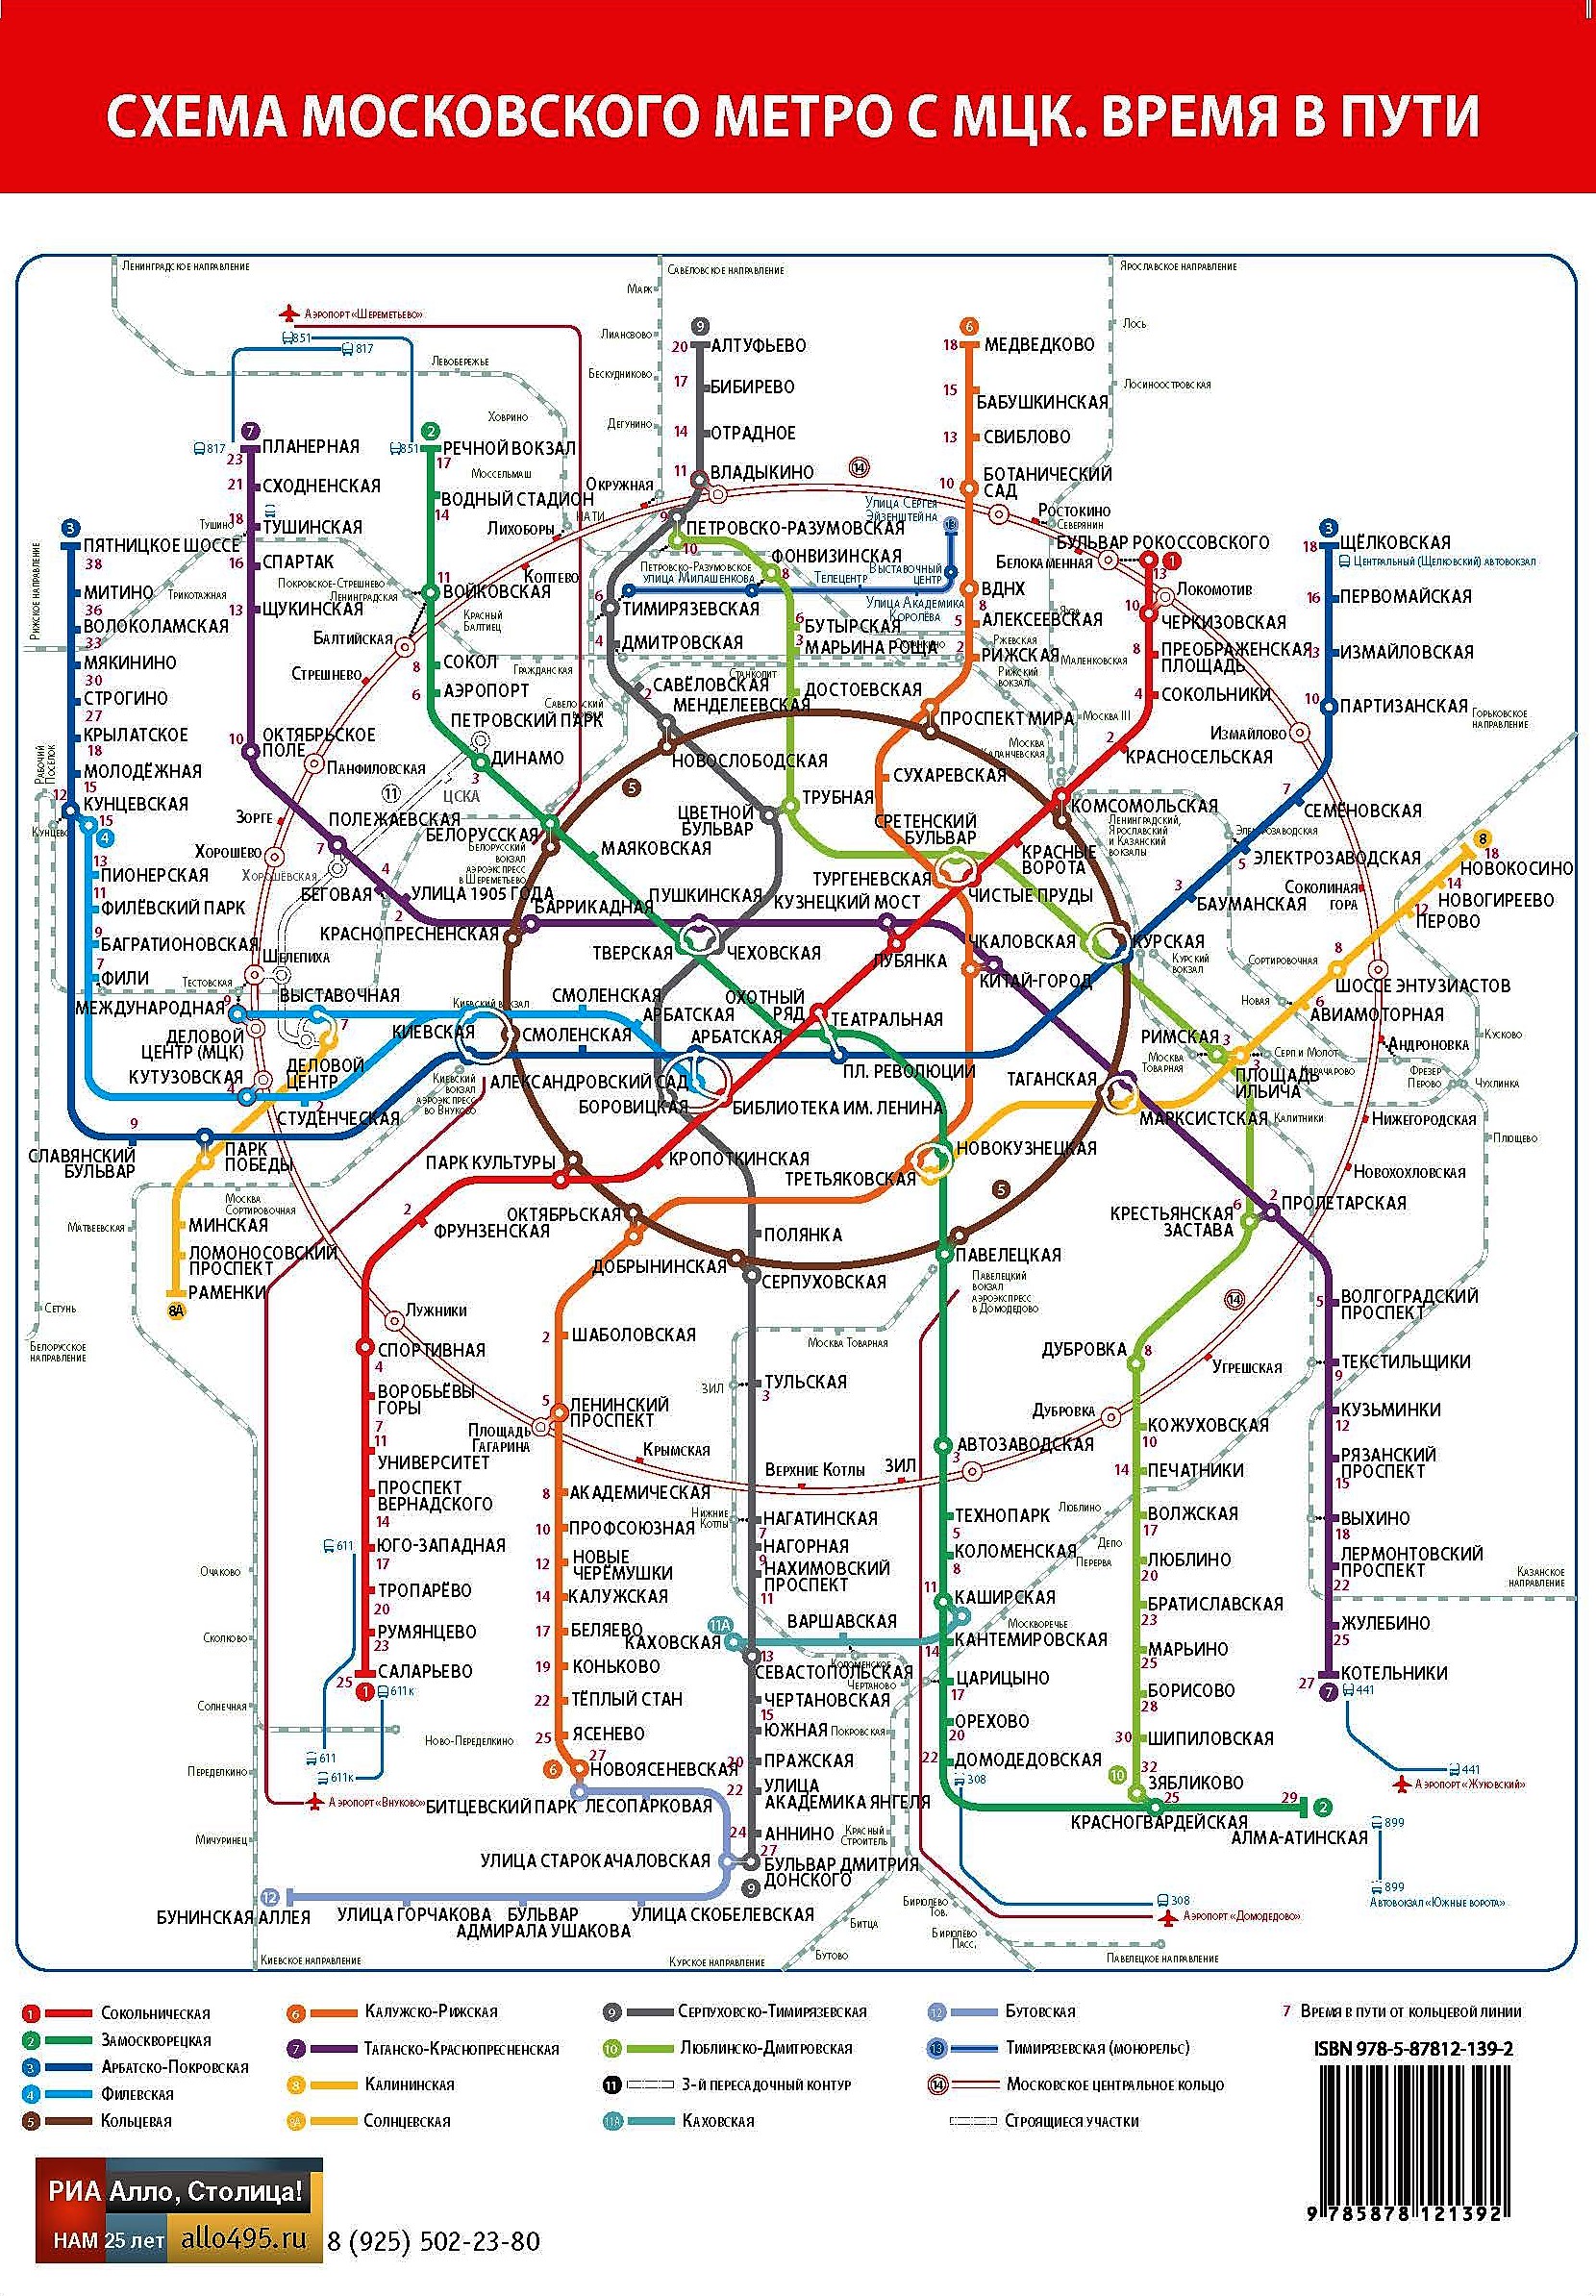 Схема московского метро 2020